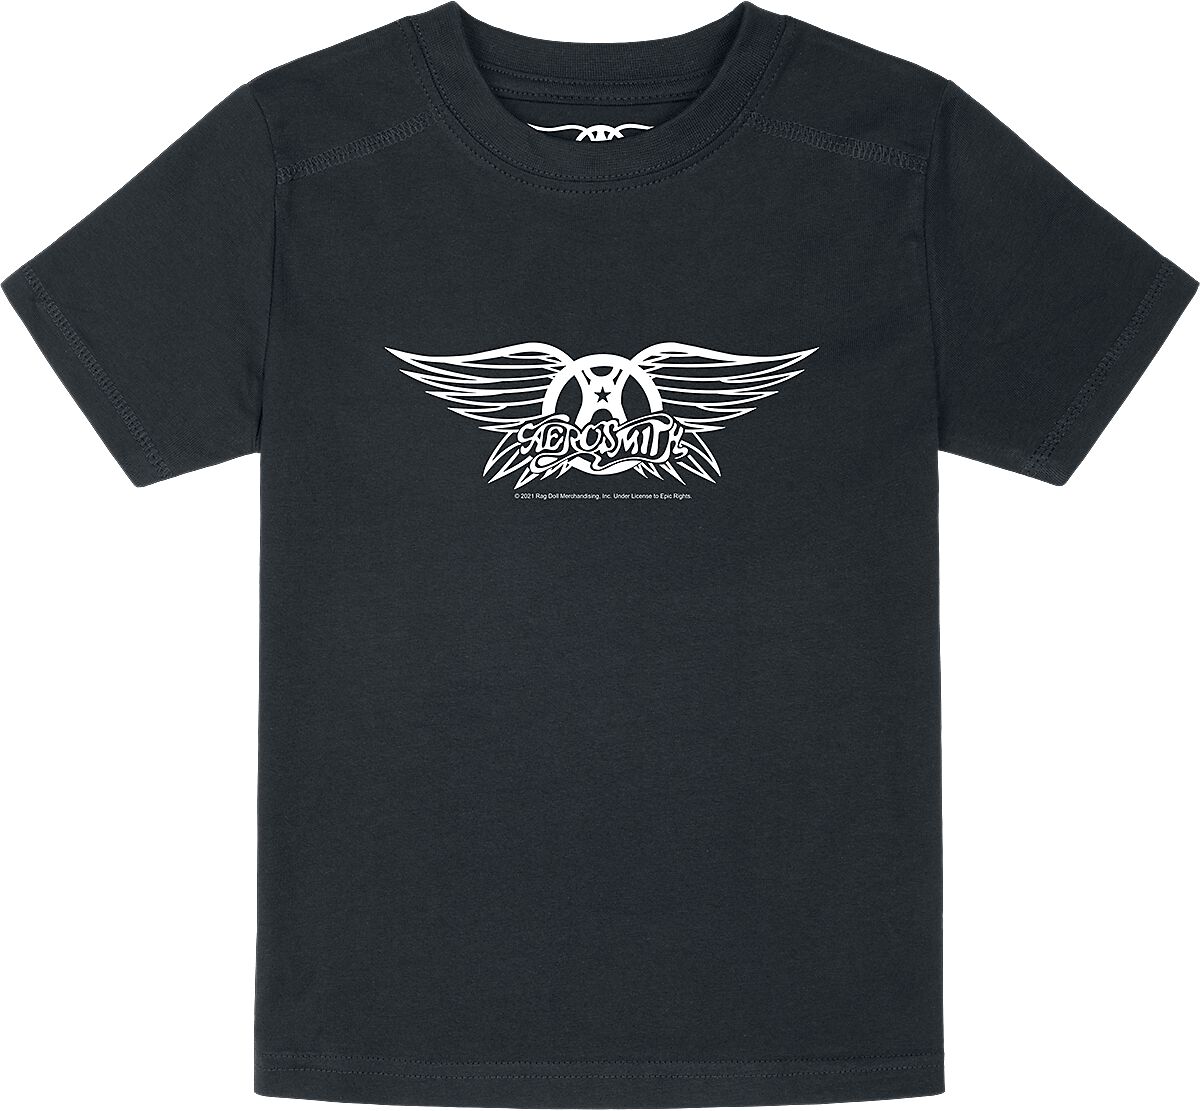 T-shirt de Aerosmith - Metal-Kids - Logo Wings - 104 - pour filles & garçonse - noir